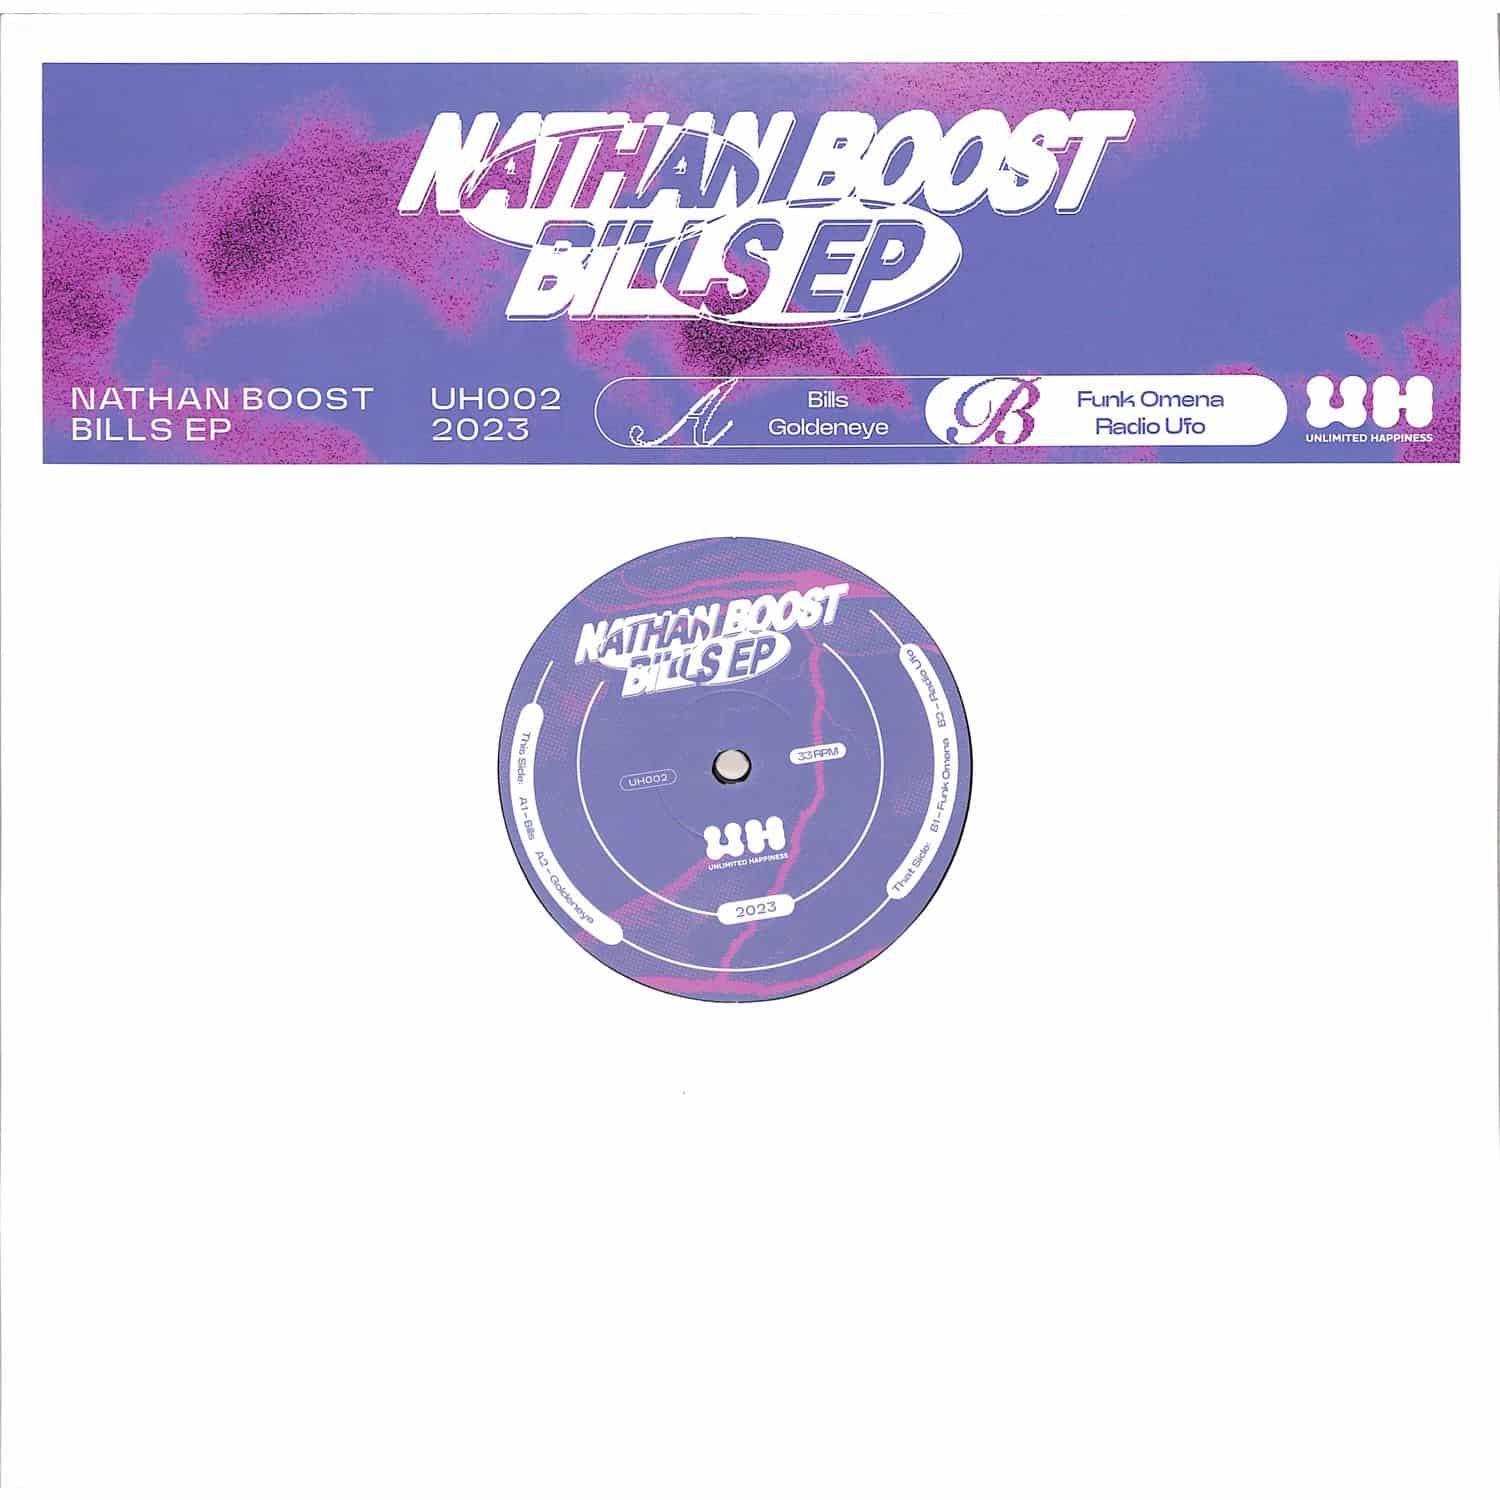 Nathan Boost - BILLS EP